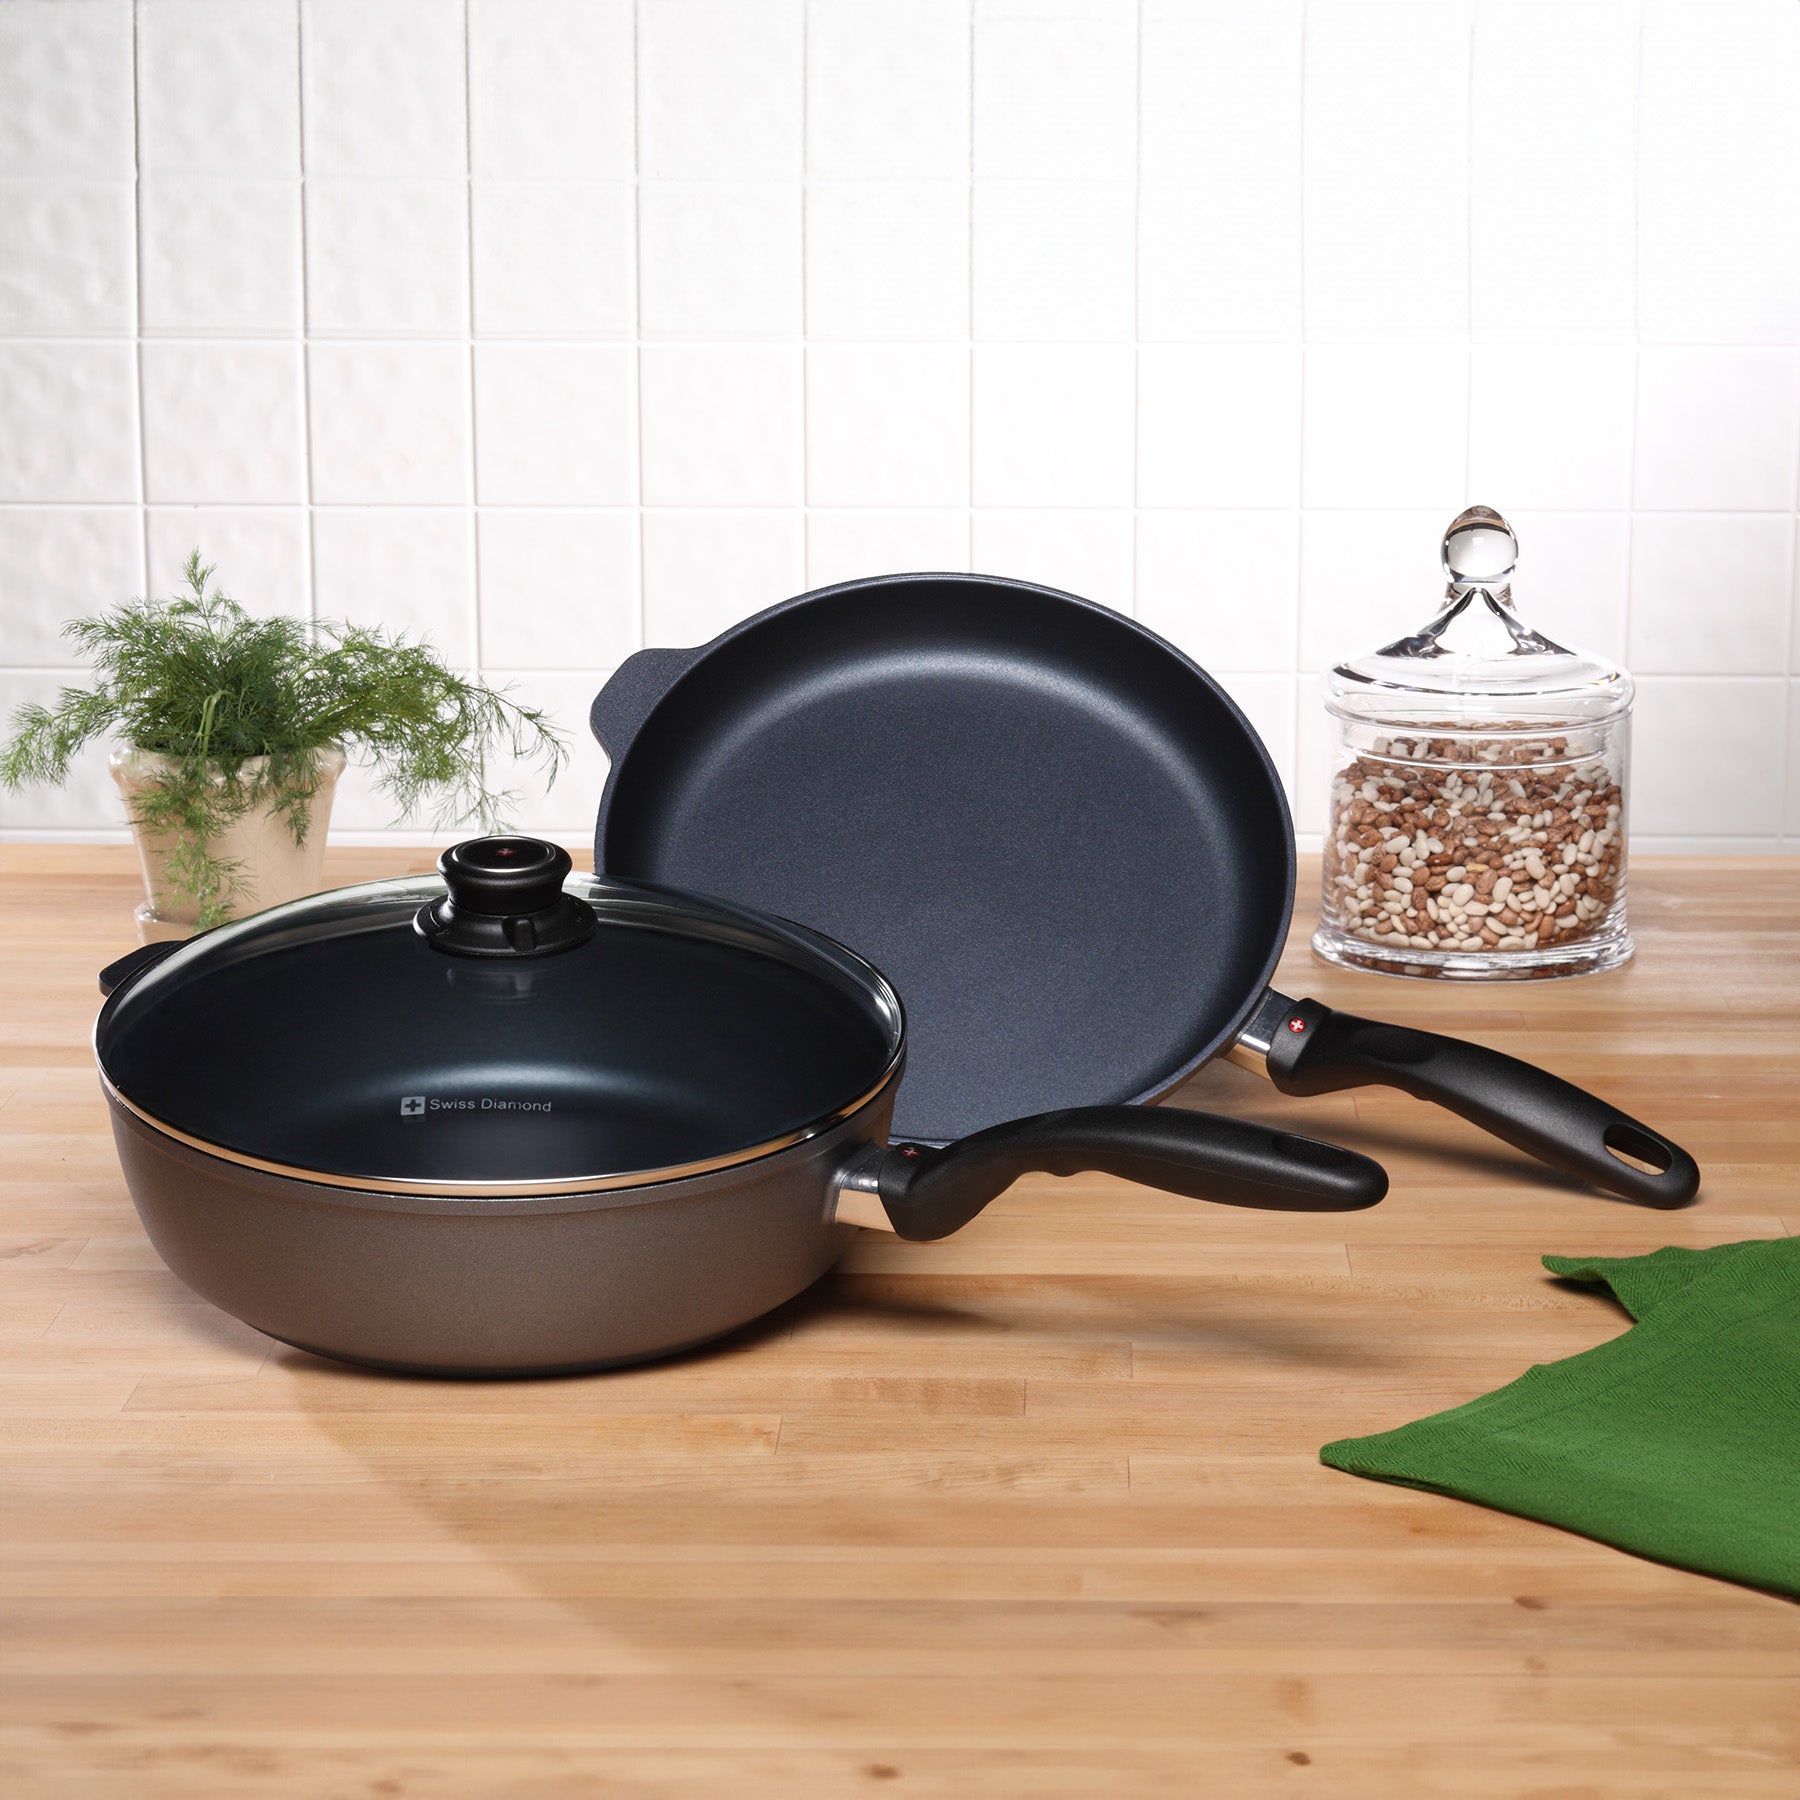 HD Nonstick 3-Piece Set - Fry Pan & Saute Pan on kitchen counter